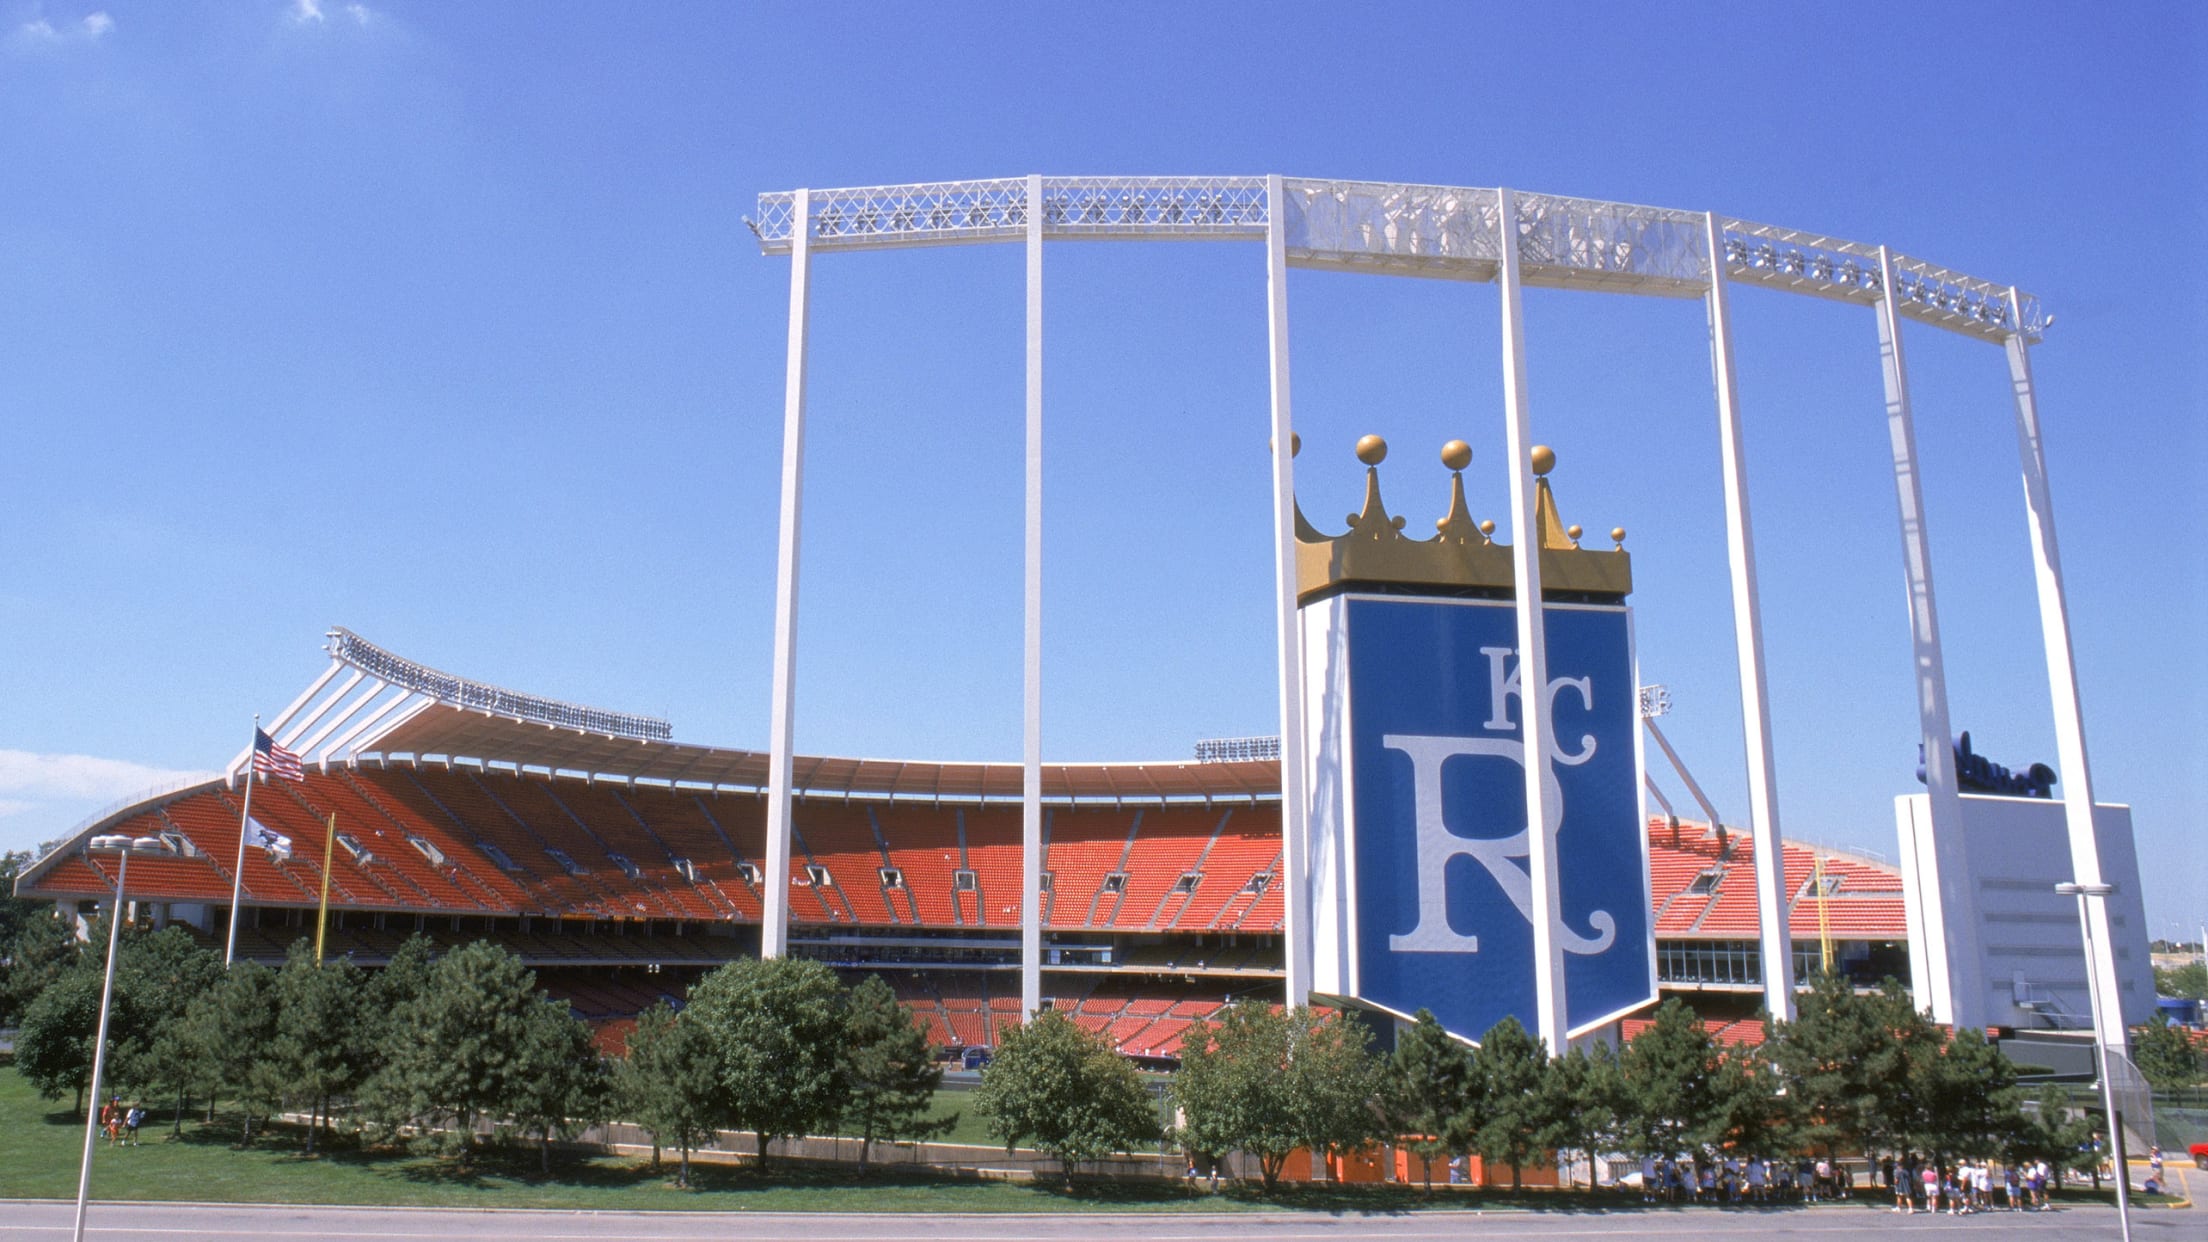 Kauffman Stadium, Kansas City Royals ballpark - Ballparks of Baseball